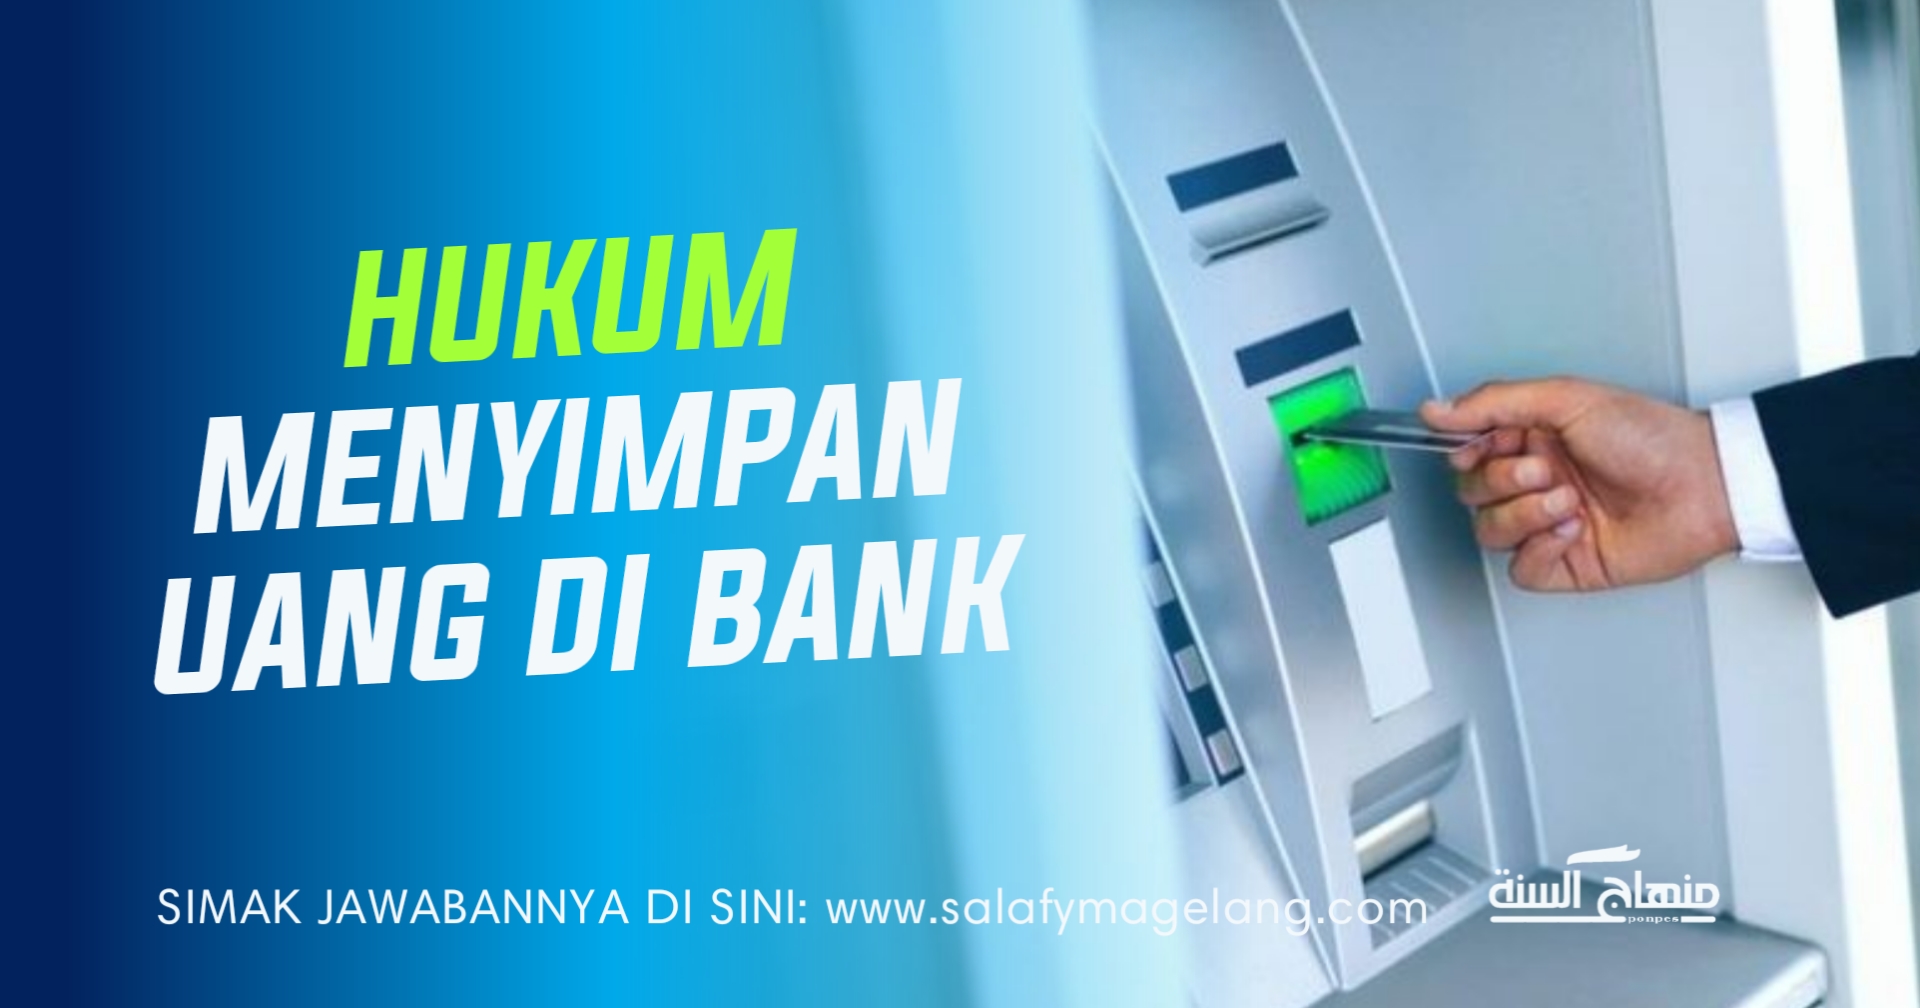 Hukum Menyimpan Uang di Bank post thumbnail image